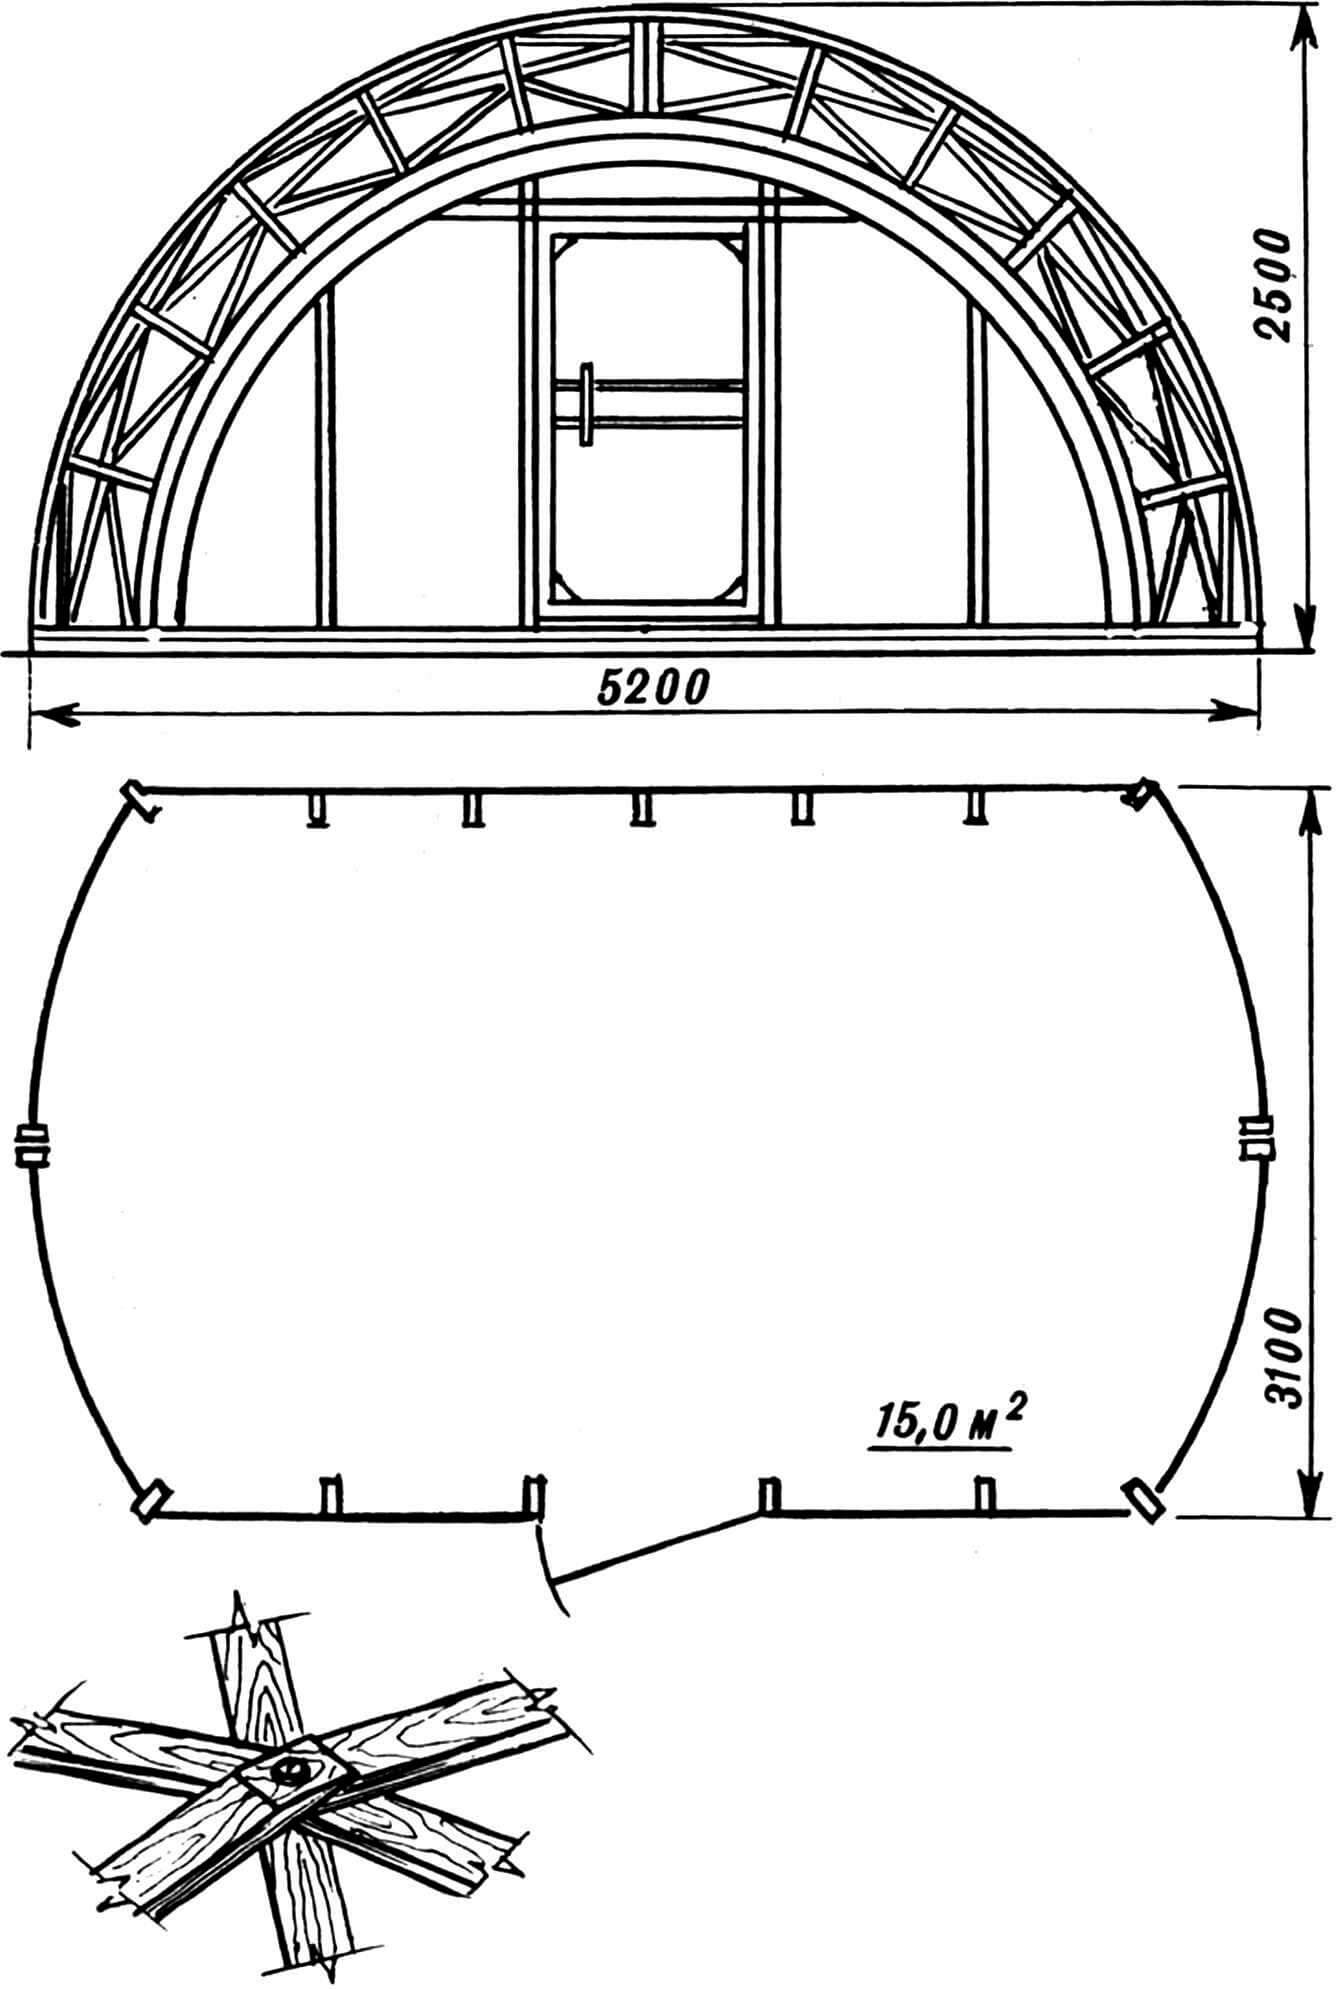 Фасад и план арочного каркаса. Внизу — типовое соединение стержней каркаса.